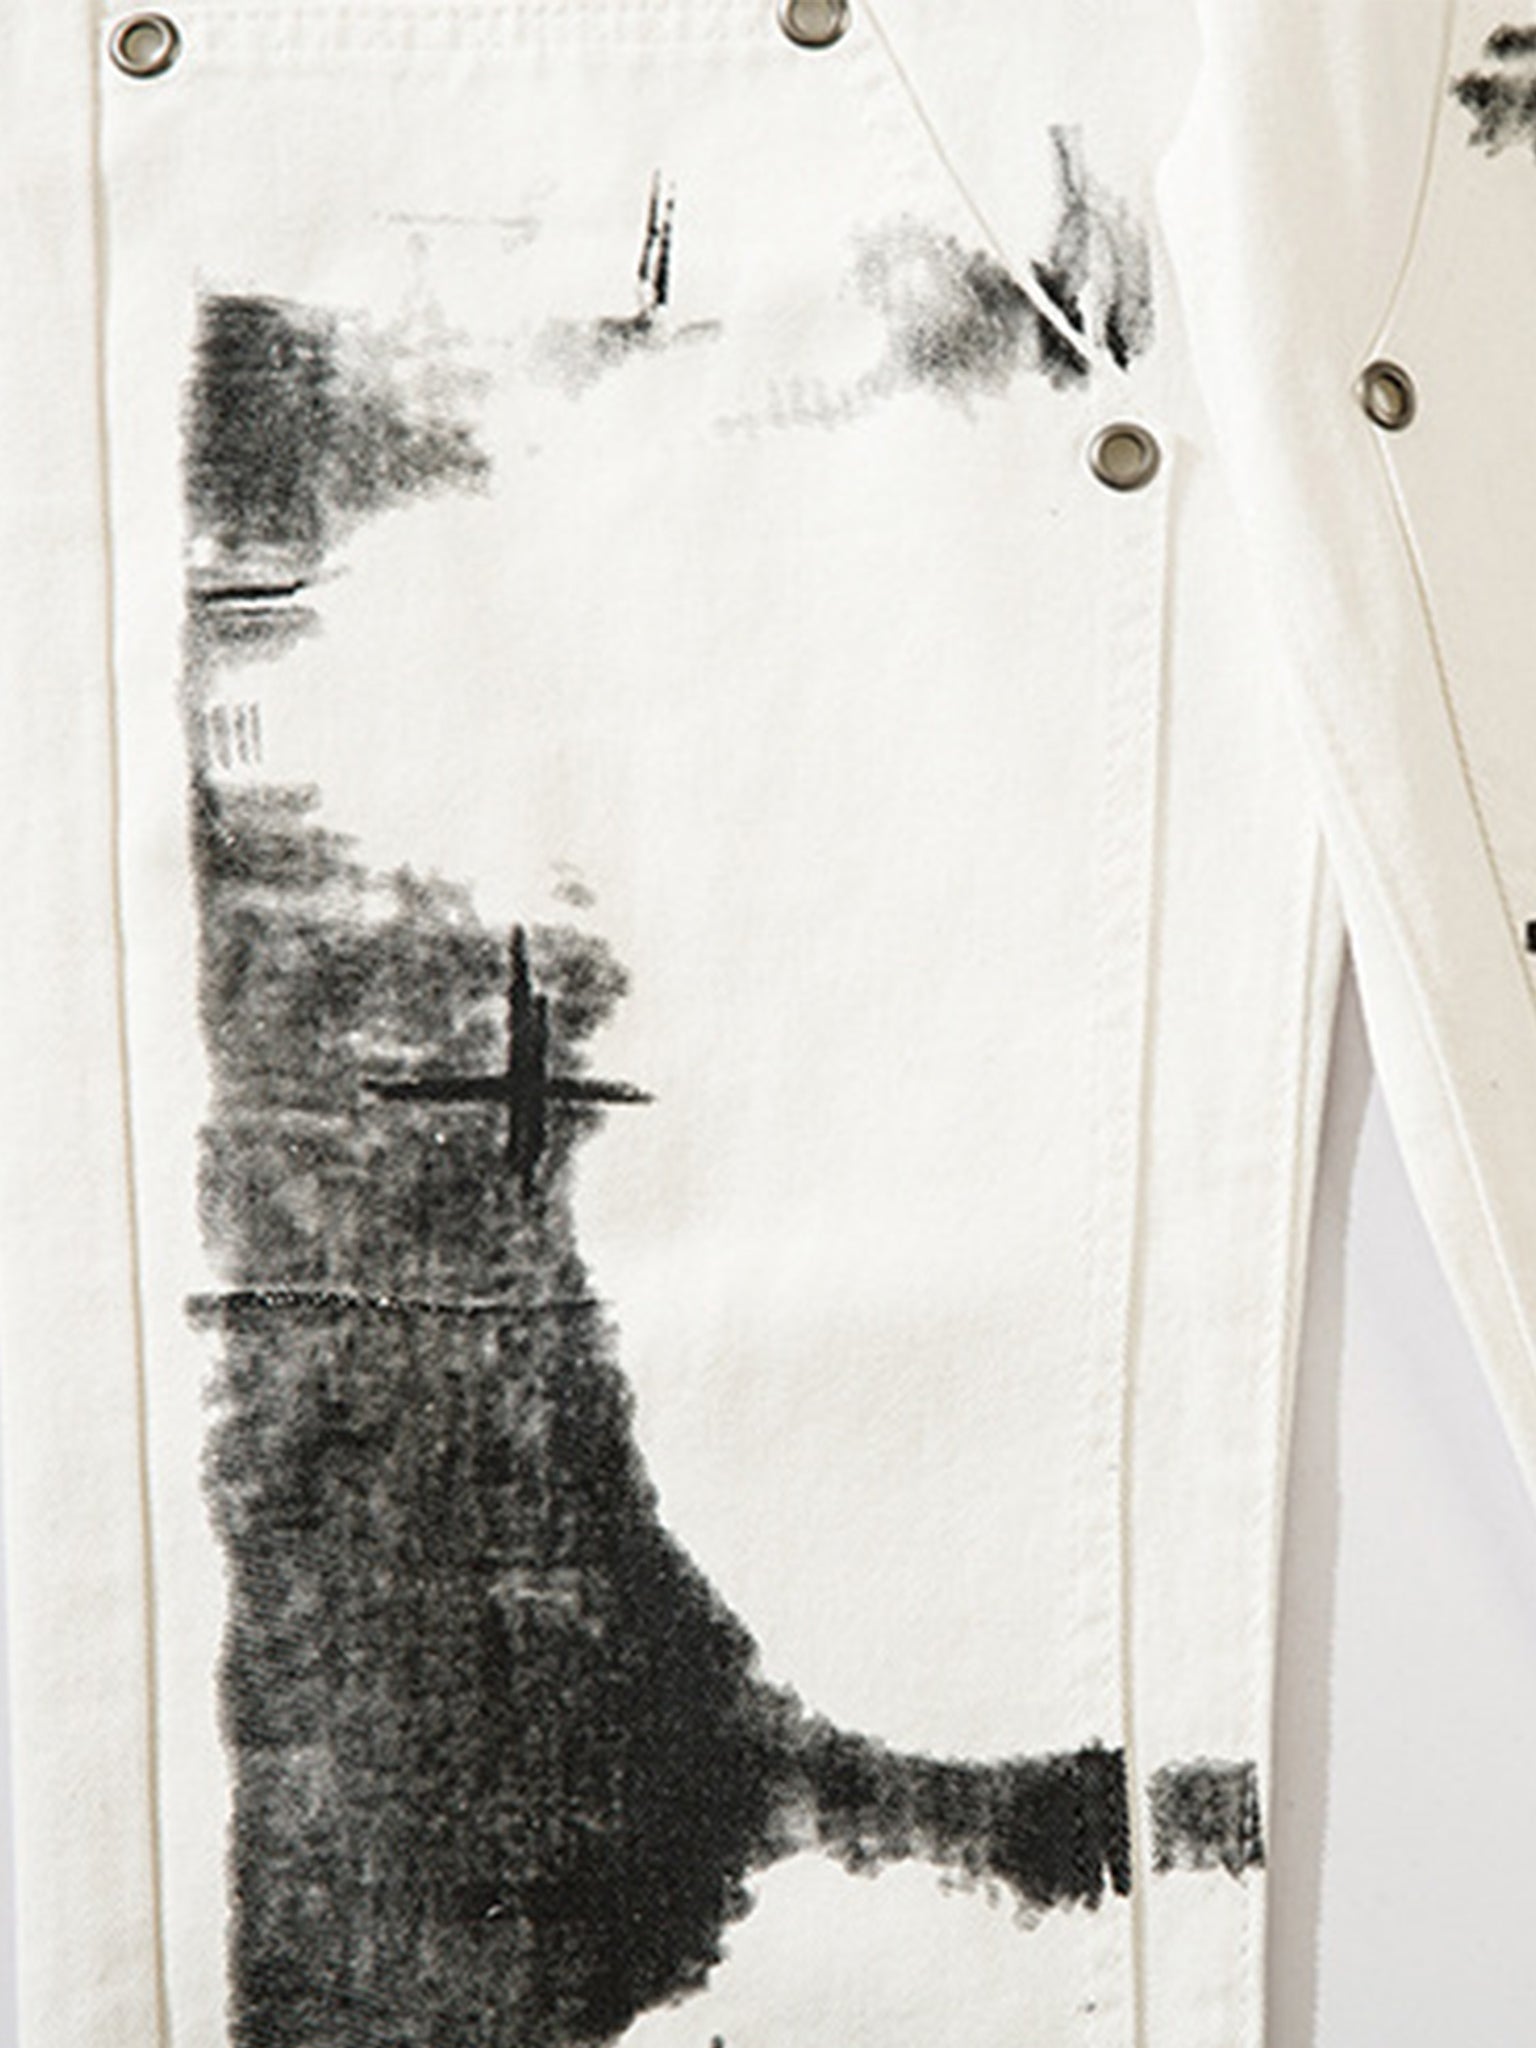 The Supermade Graffiti Print White Straight Jeans -1184